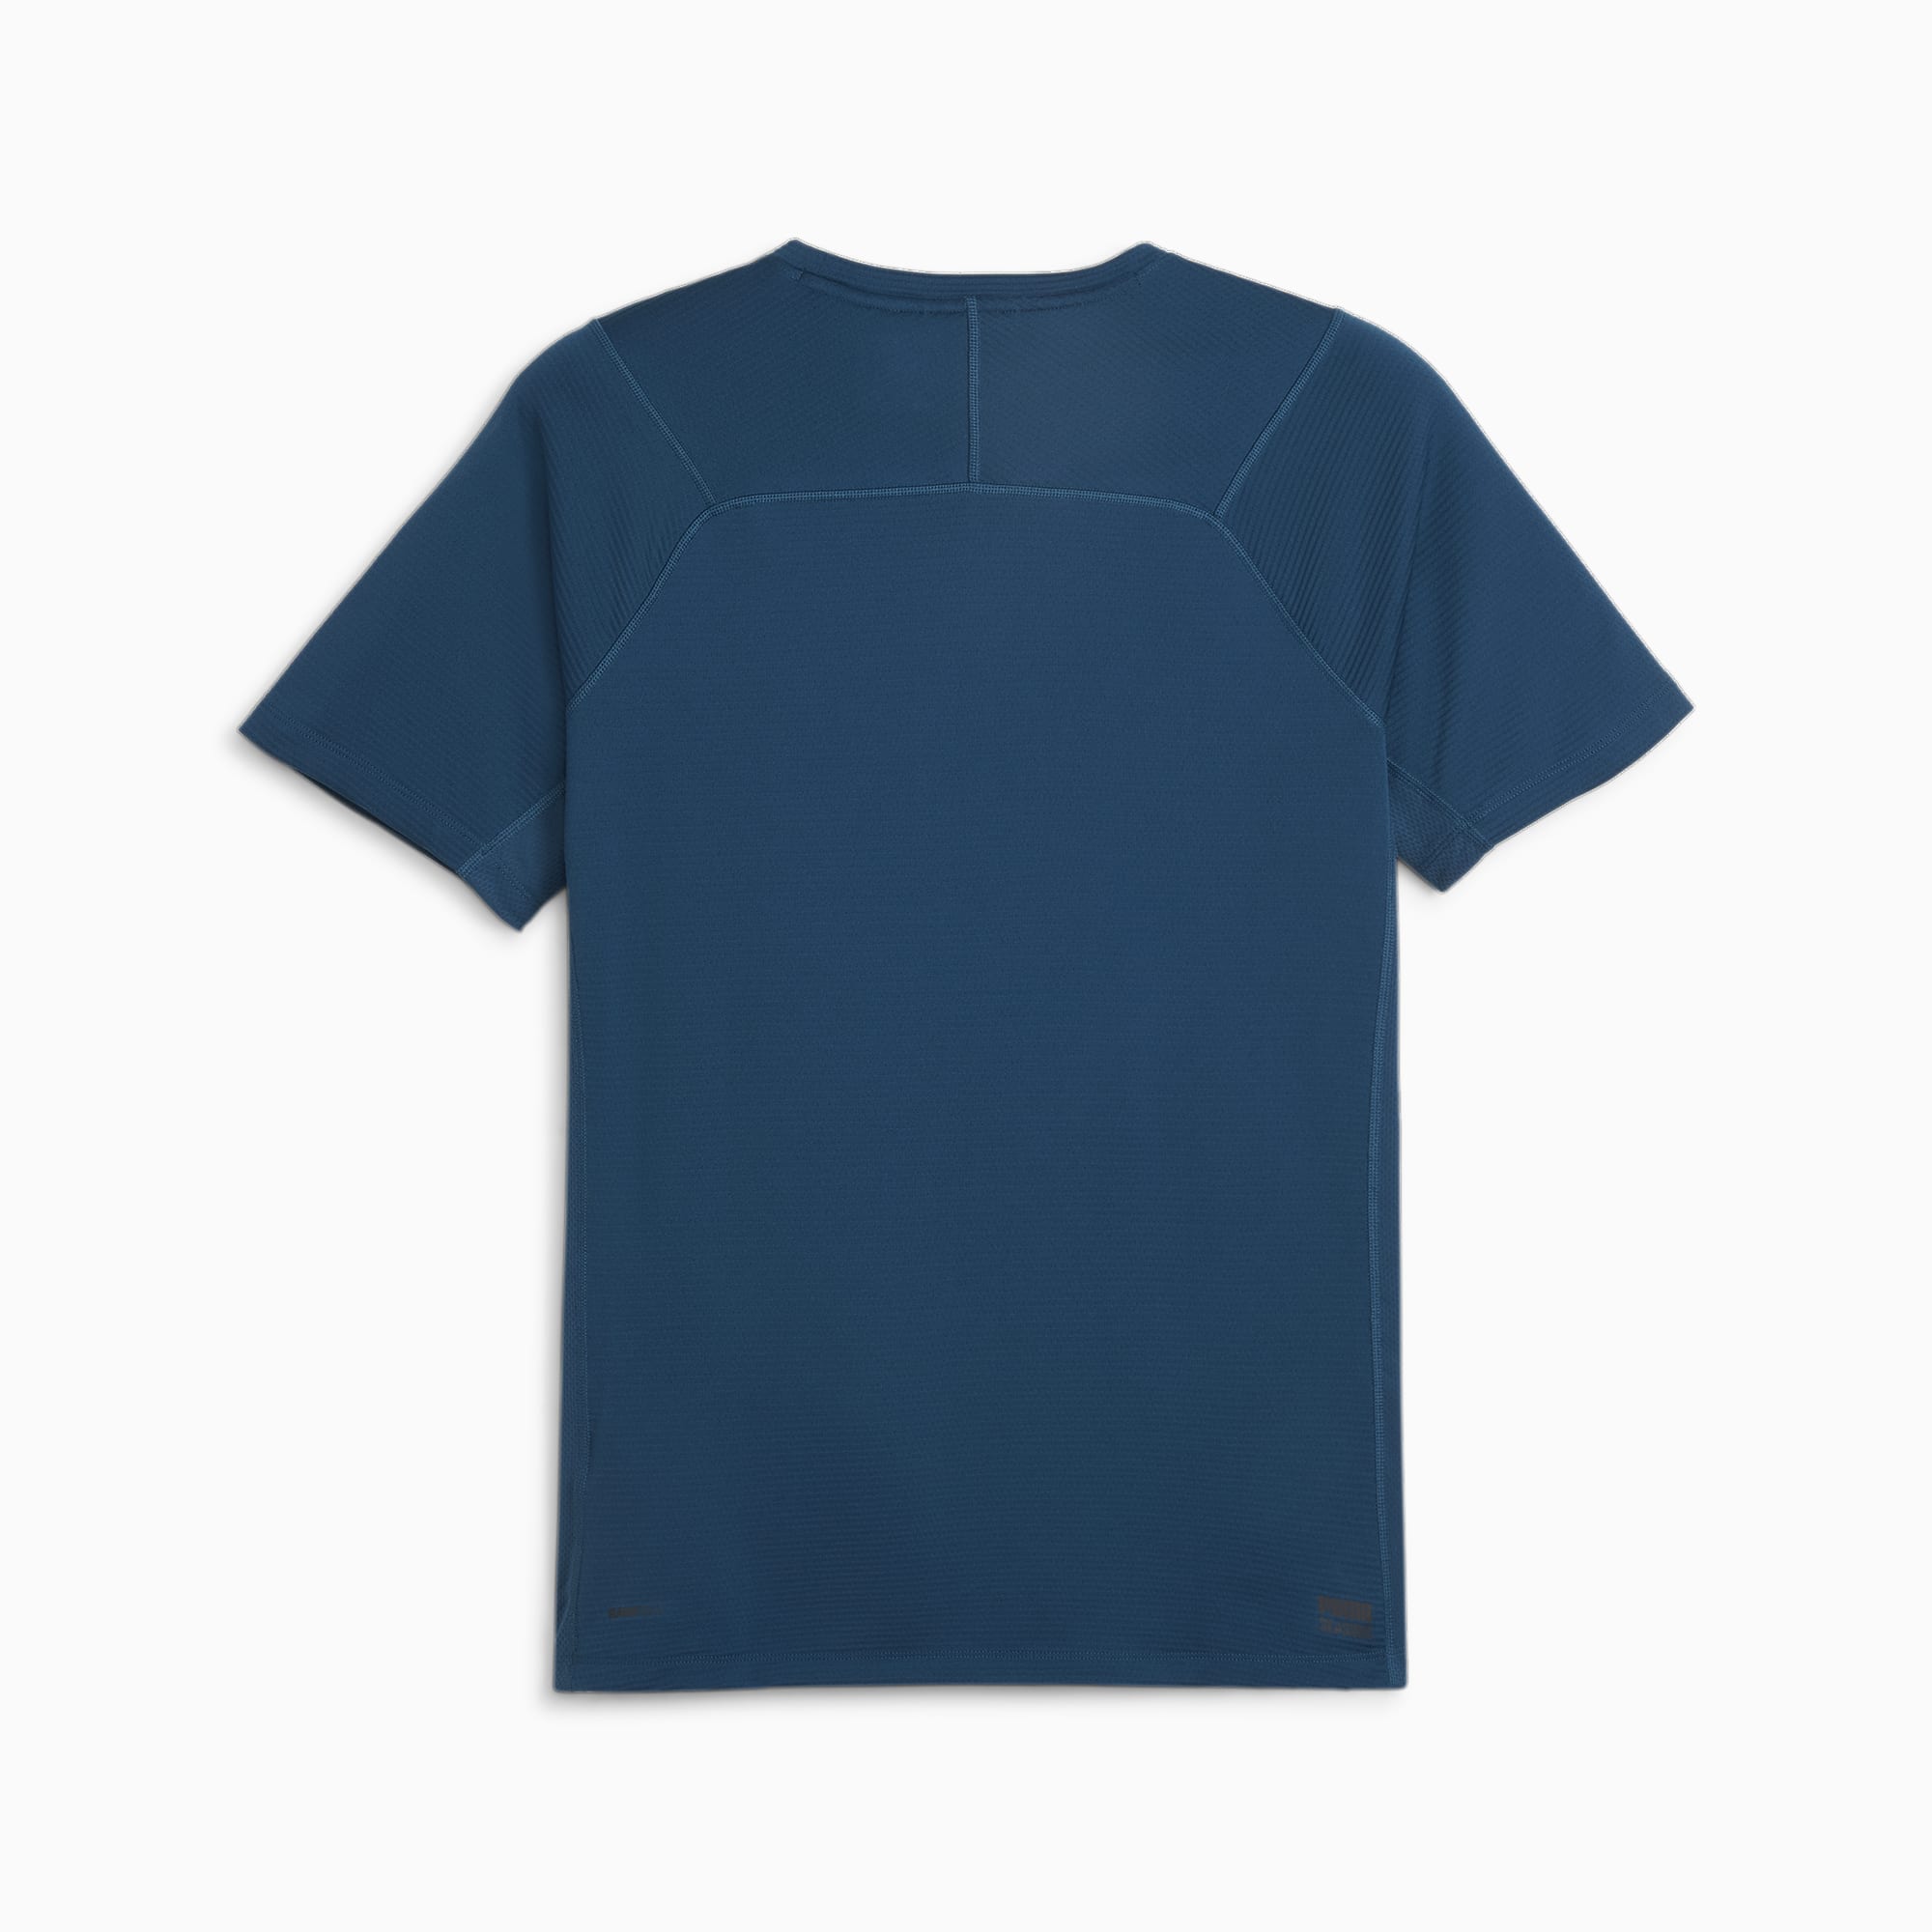 PUMA Seasons Short Sleeve Men's T-Shirt, Ocean Tropic, Size XS, Clothing